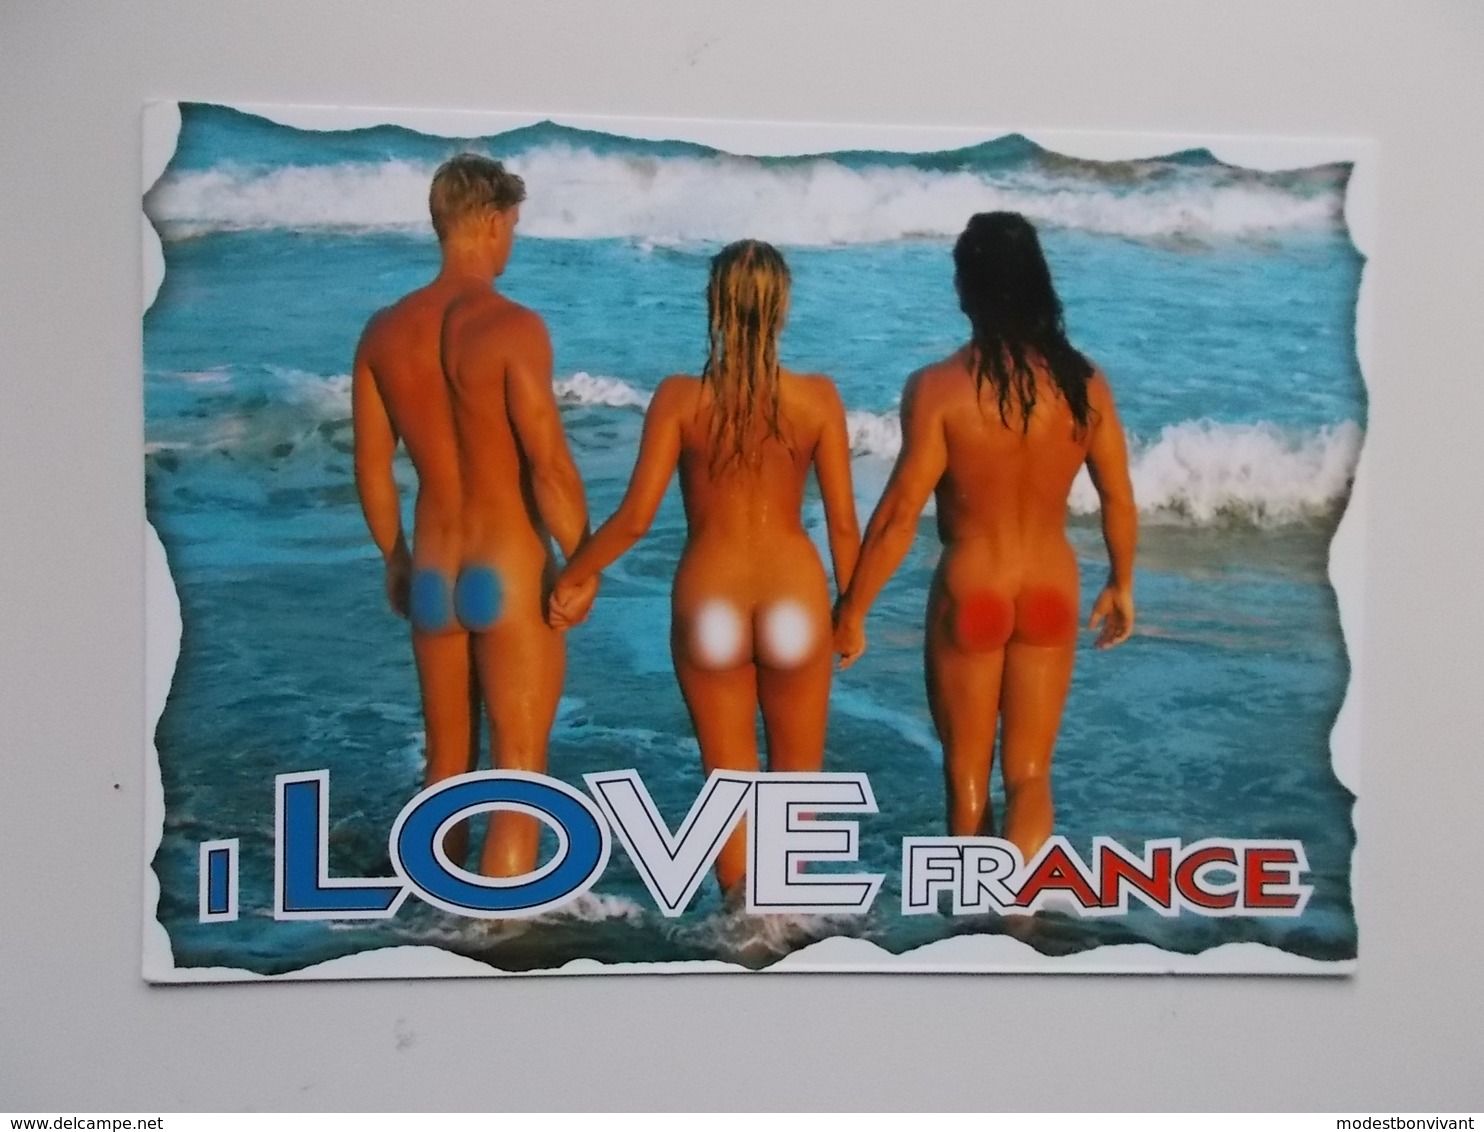 I LOVE FRANCE - Agde